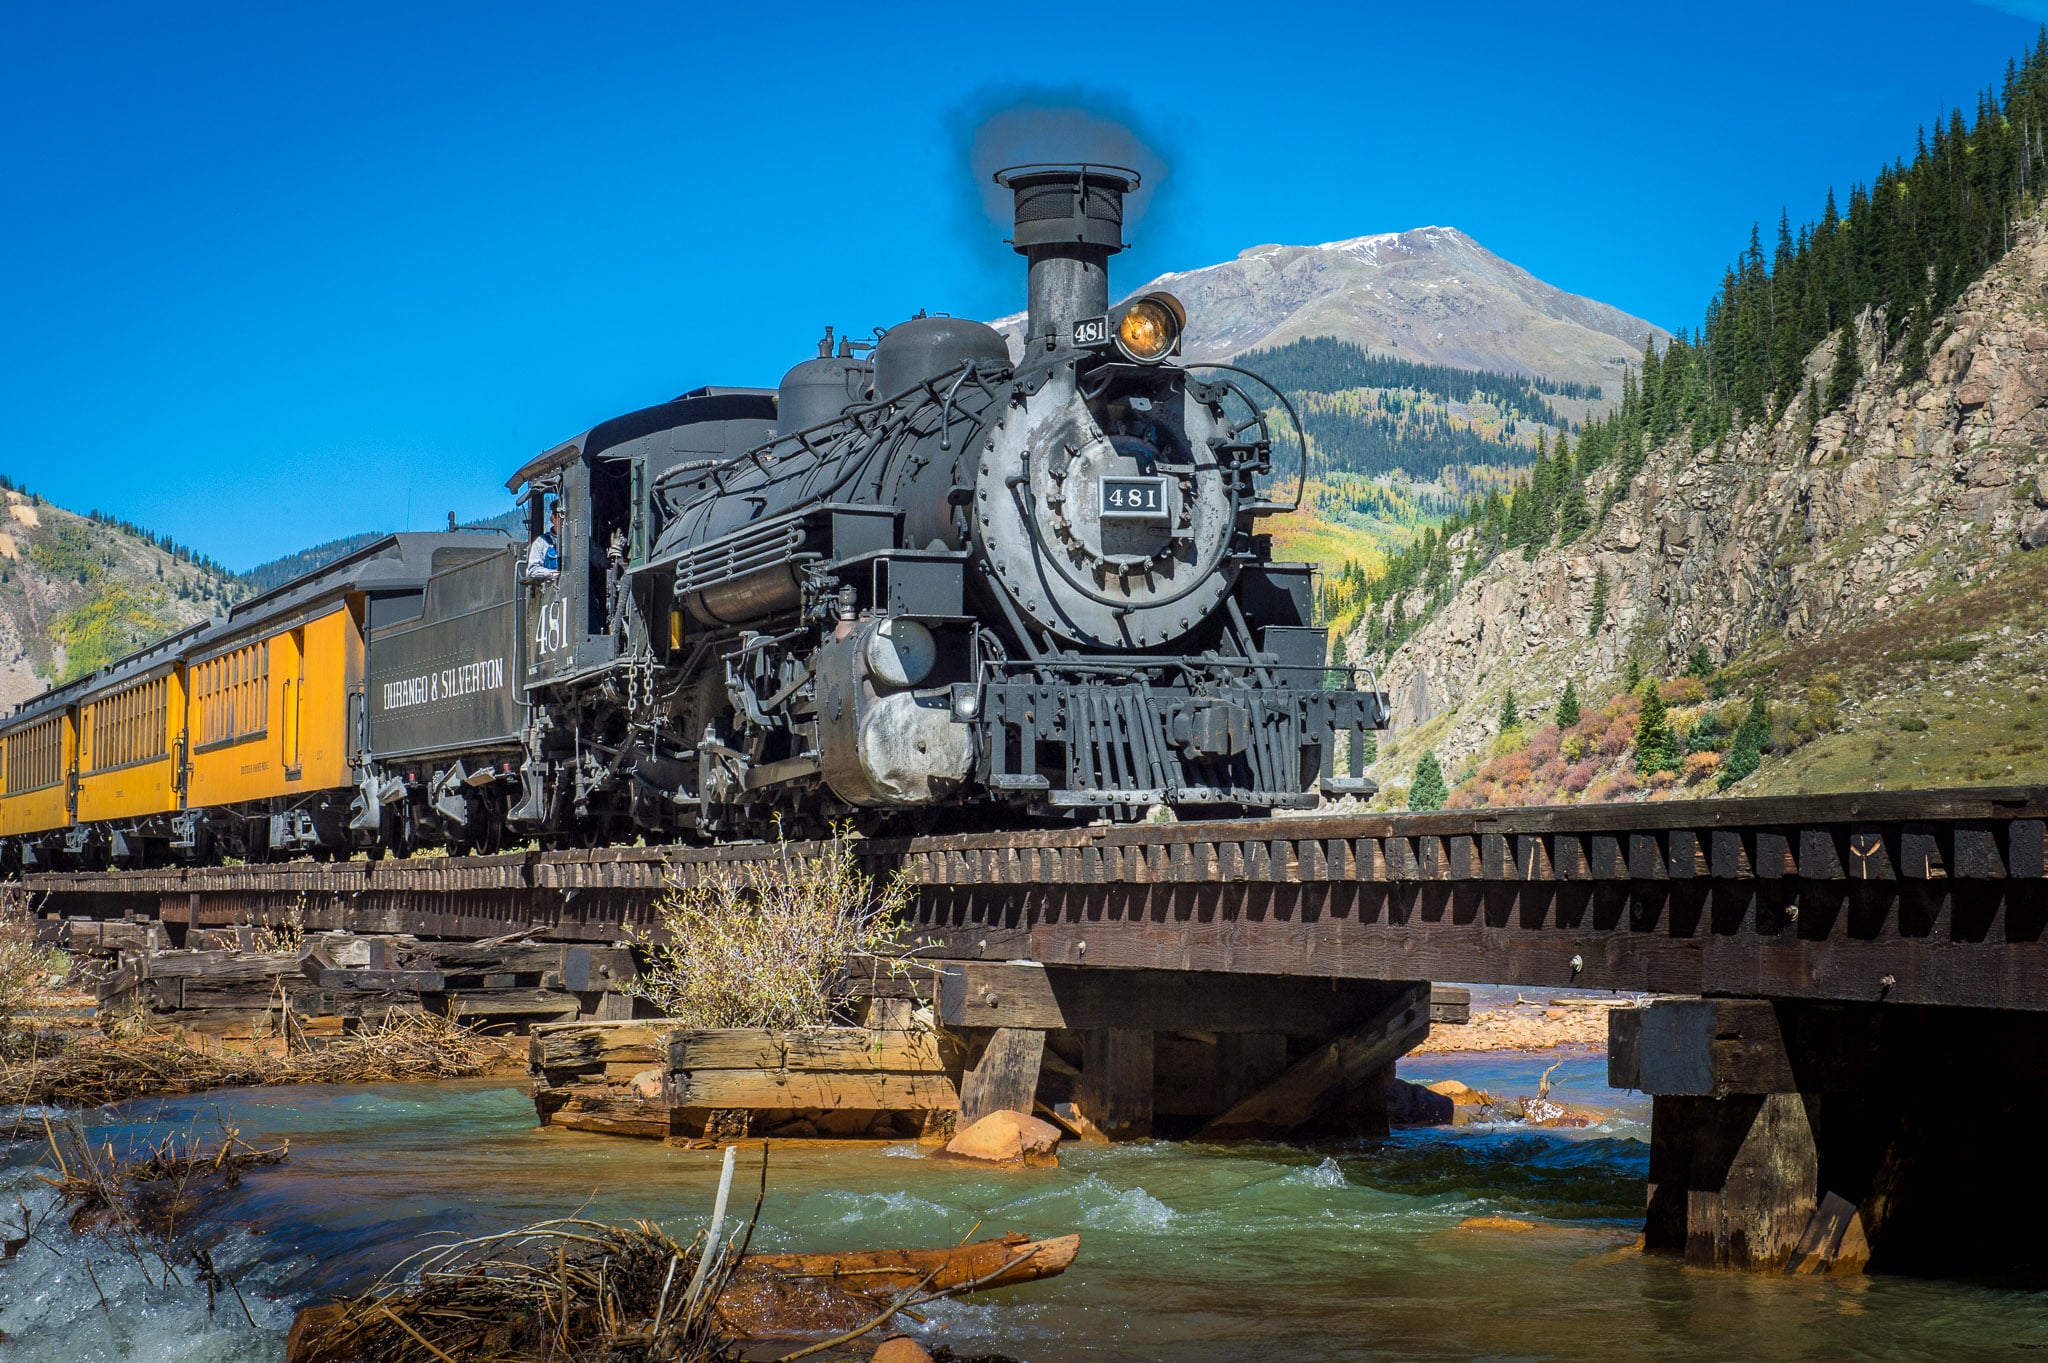 View of the autumn Durqango & Silverton Photography train as it makes its way along the Animas River between Durango and Silverton, Colorado.